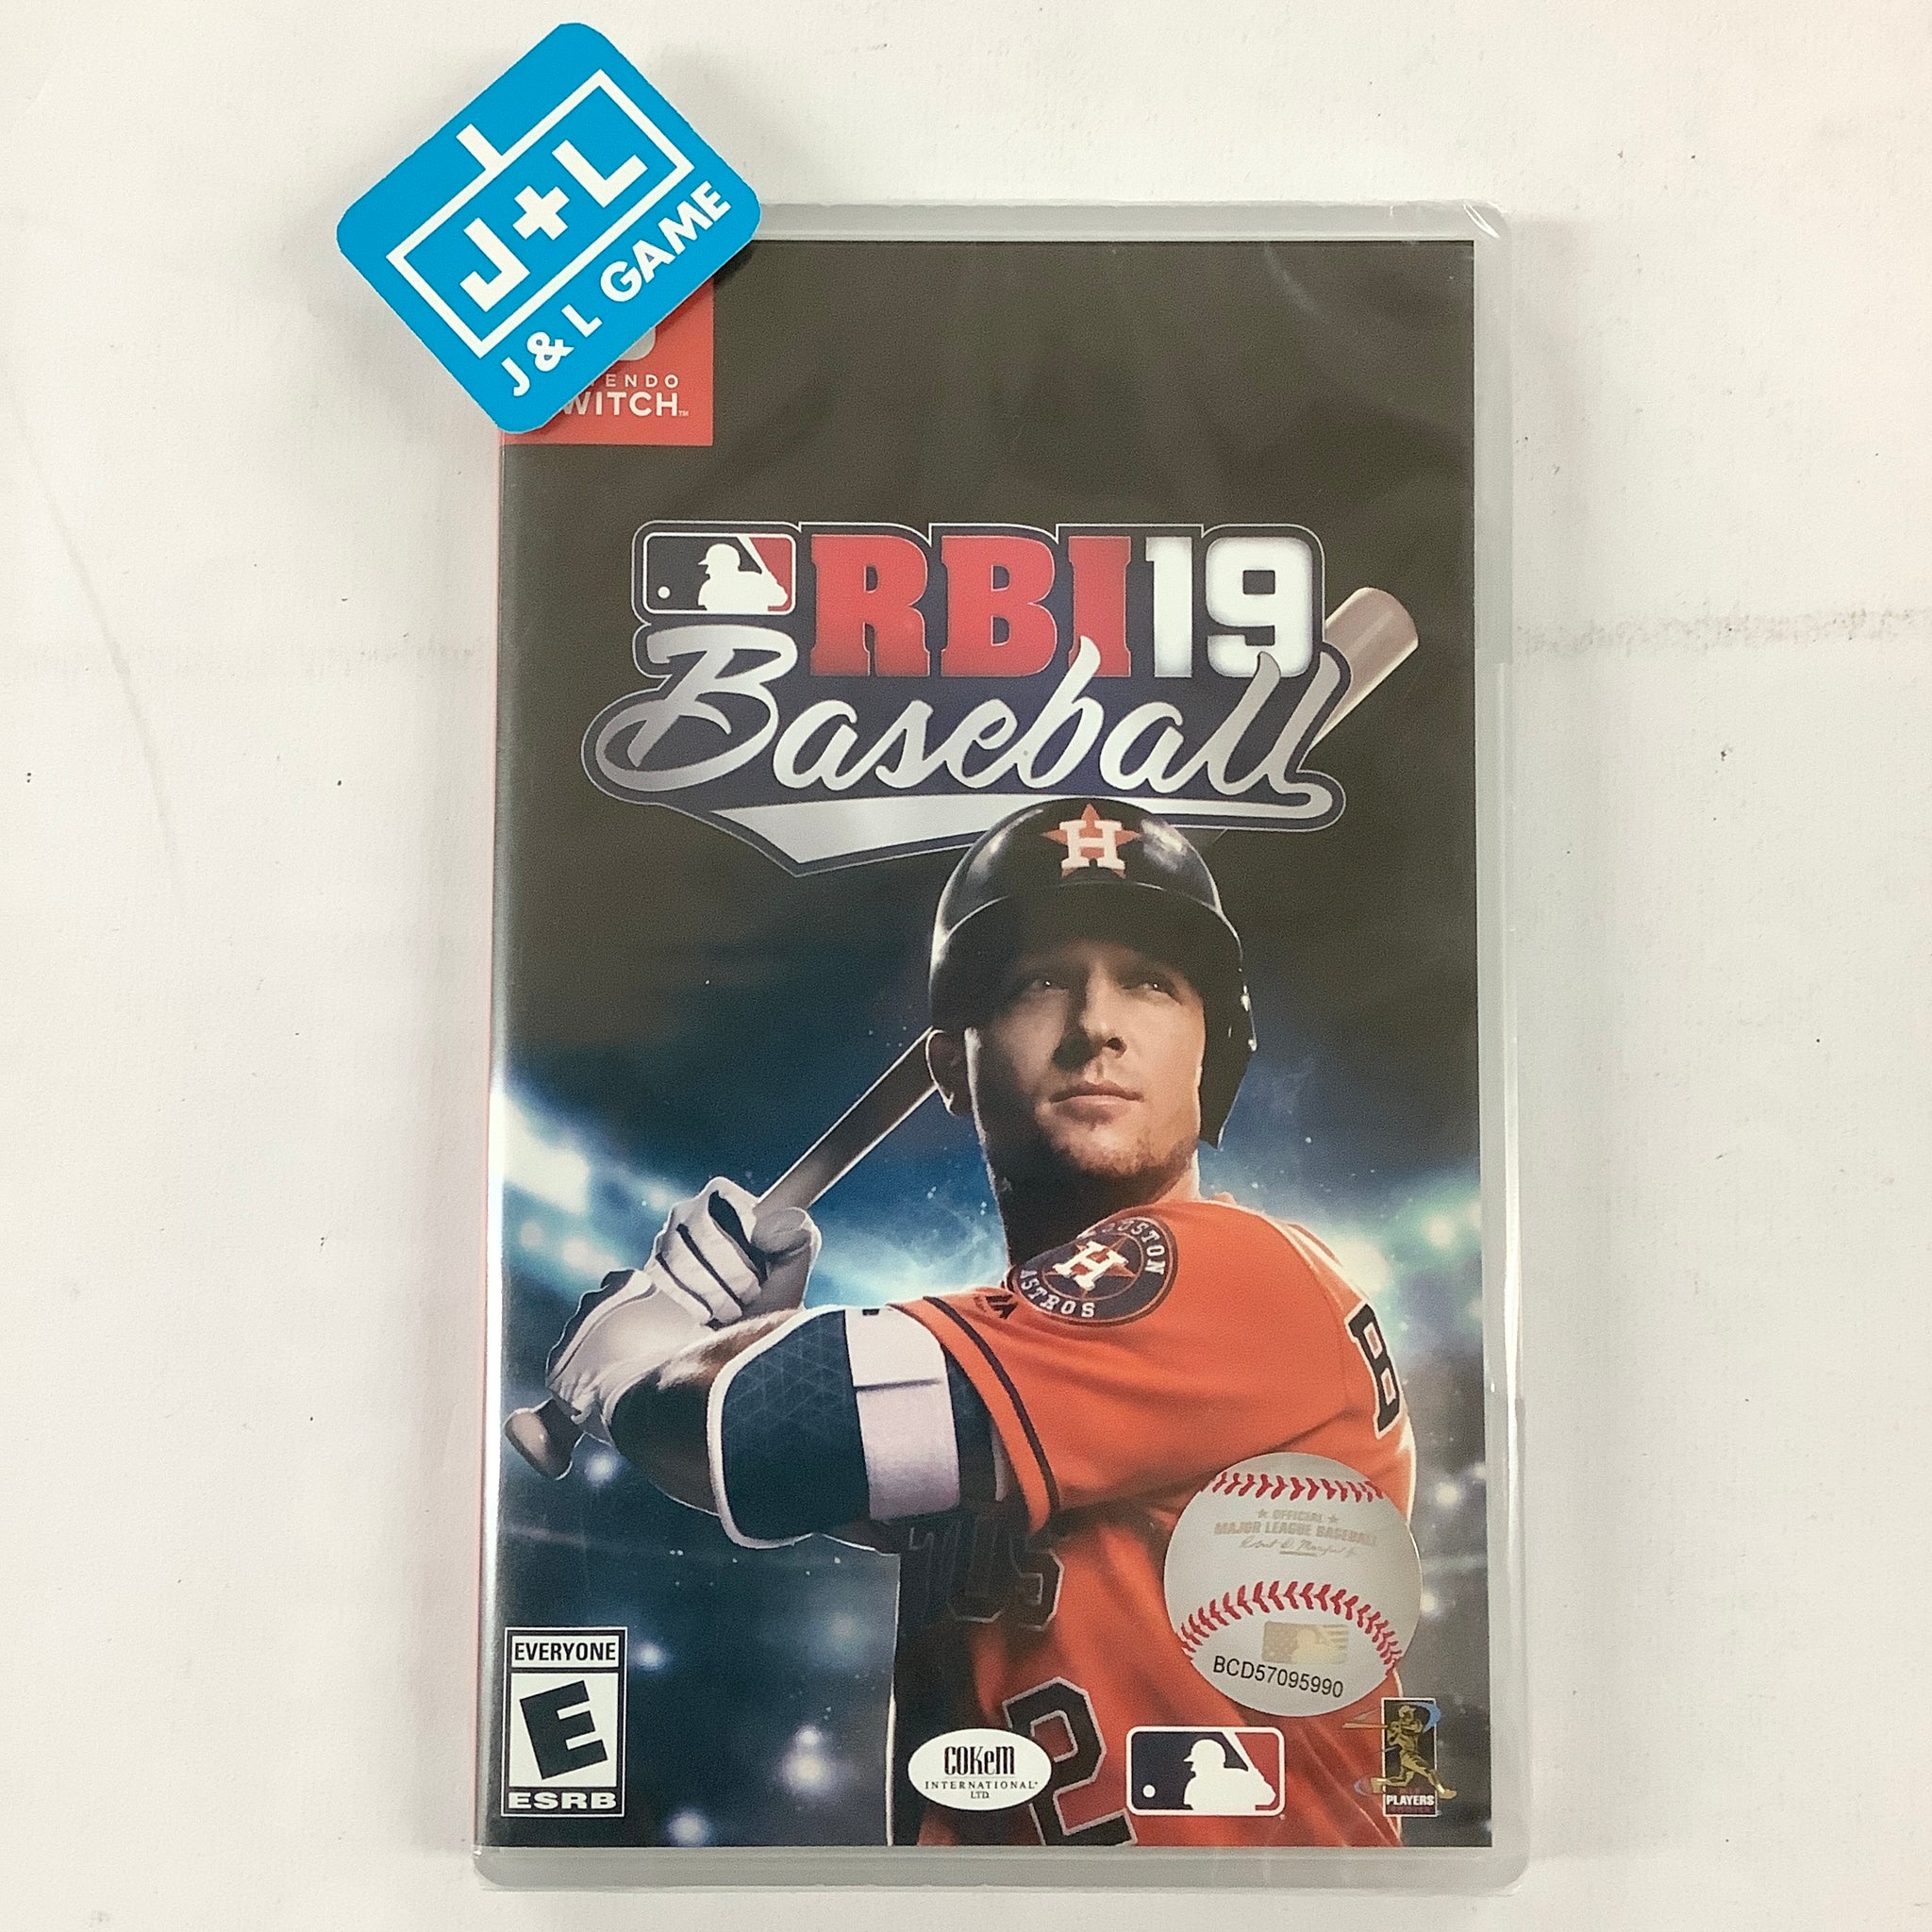 R.B.I. Baseball 19 - (NSW) Nintendo Switch Video Games MLB AM   